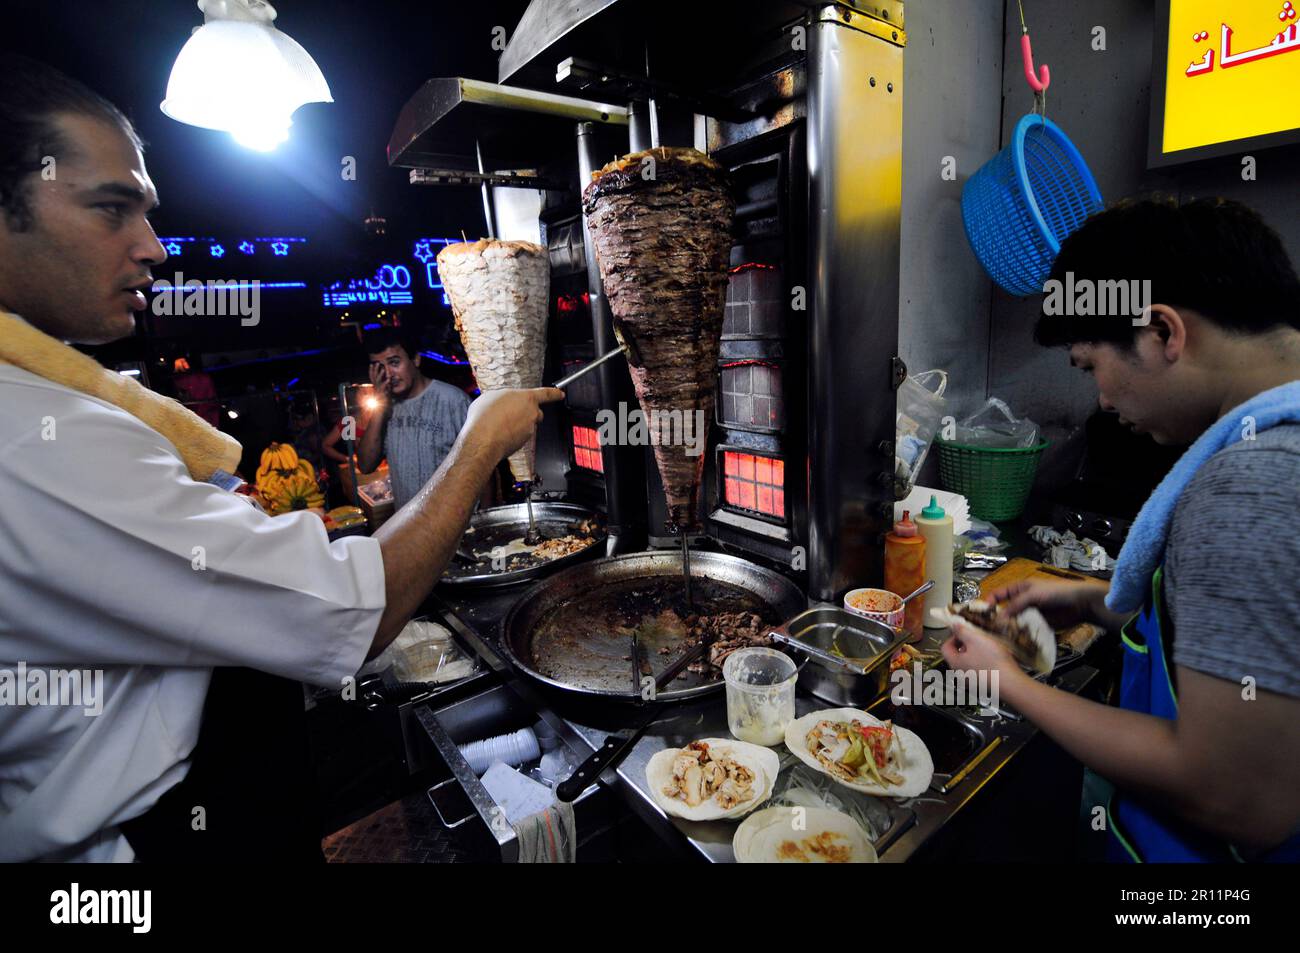 A Shawarma shop in Arab town on Sukhumvit Soi 3. Bangkok, Thailand. Stock Photo